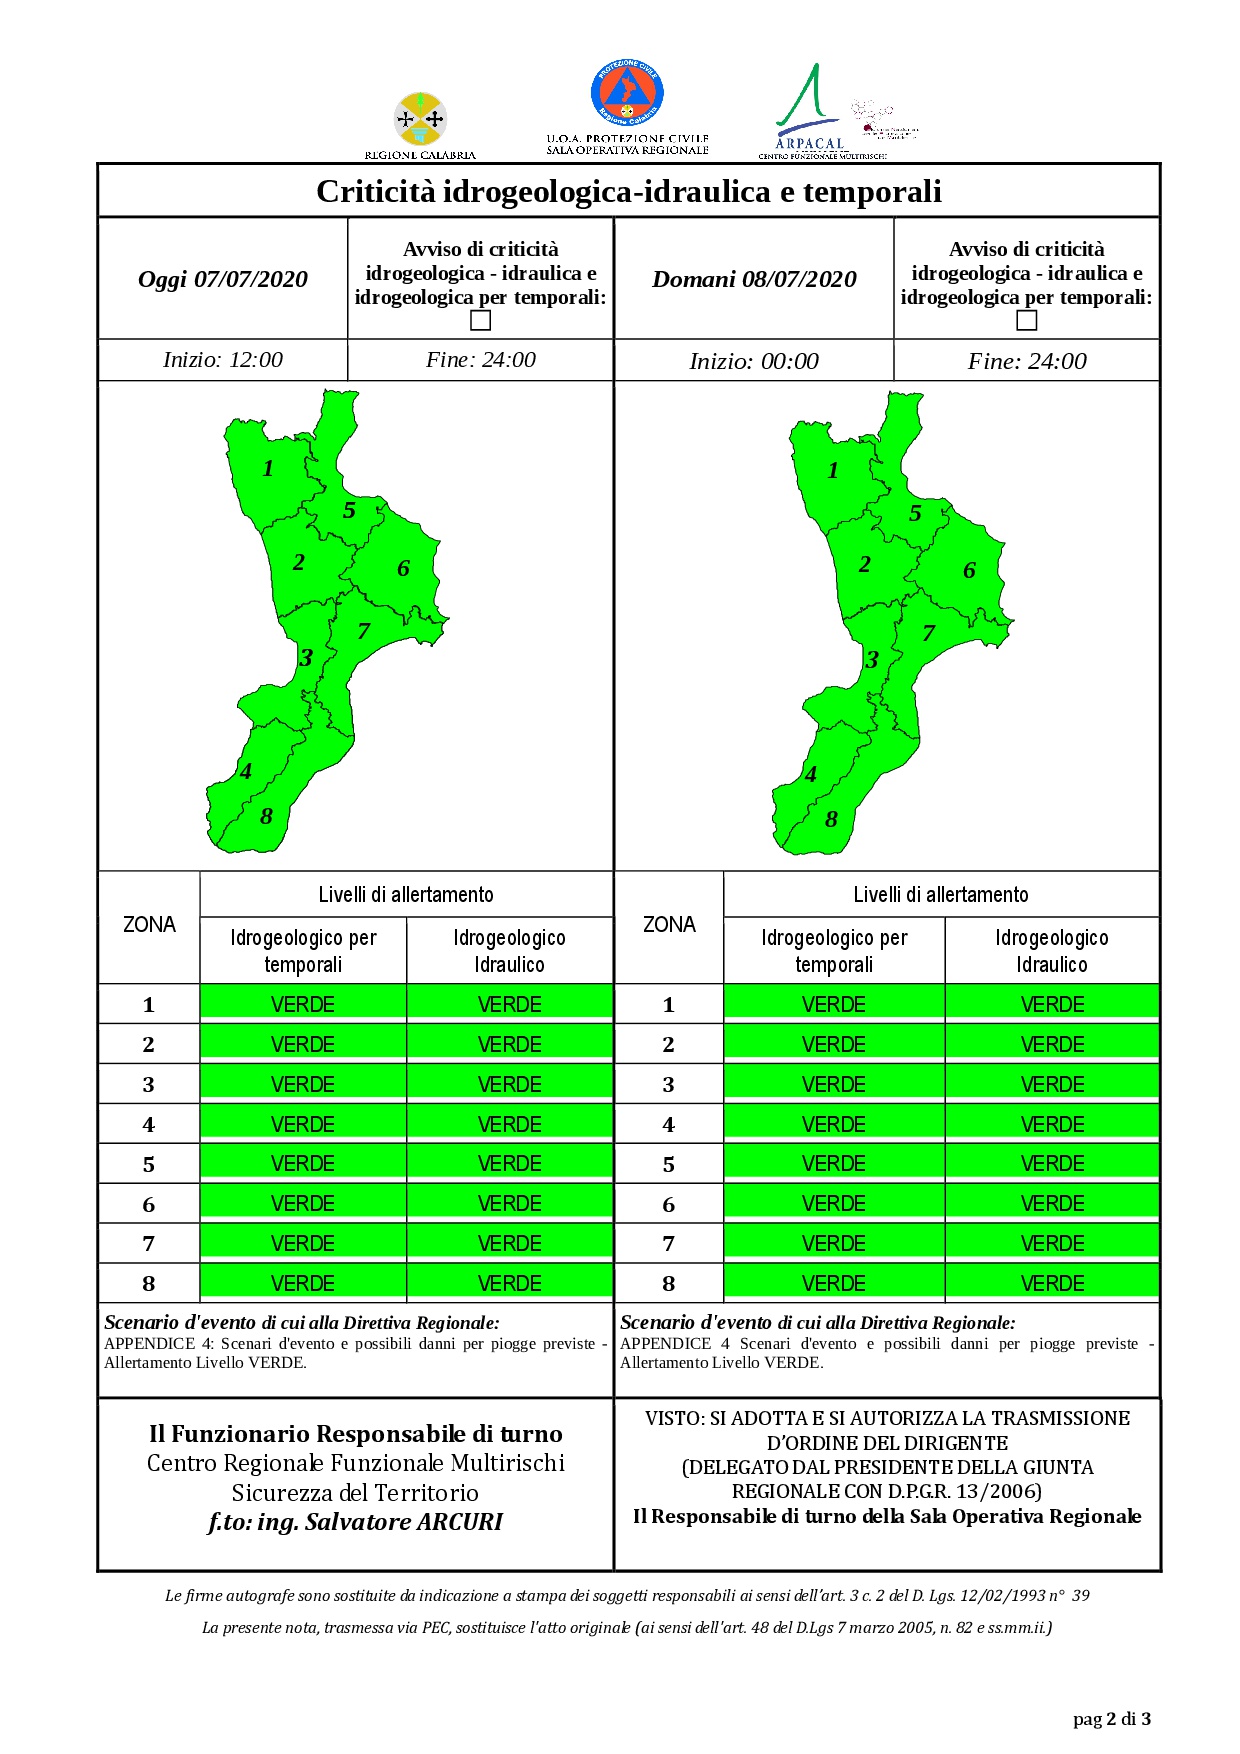 Criticità idrogeologica-idraulica e temporali in Calabria 07-07-2020